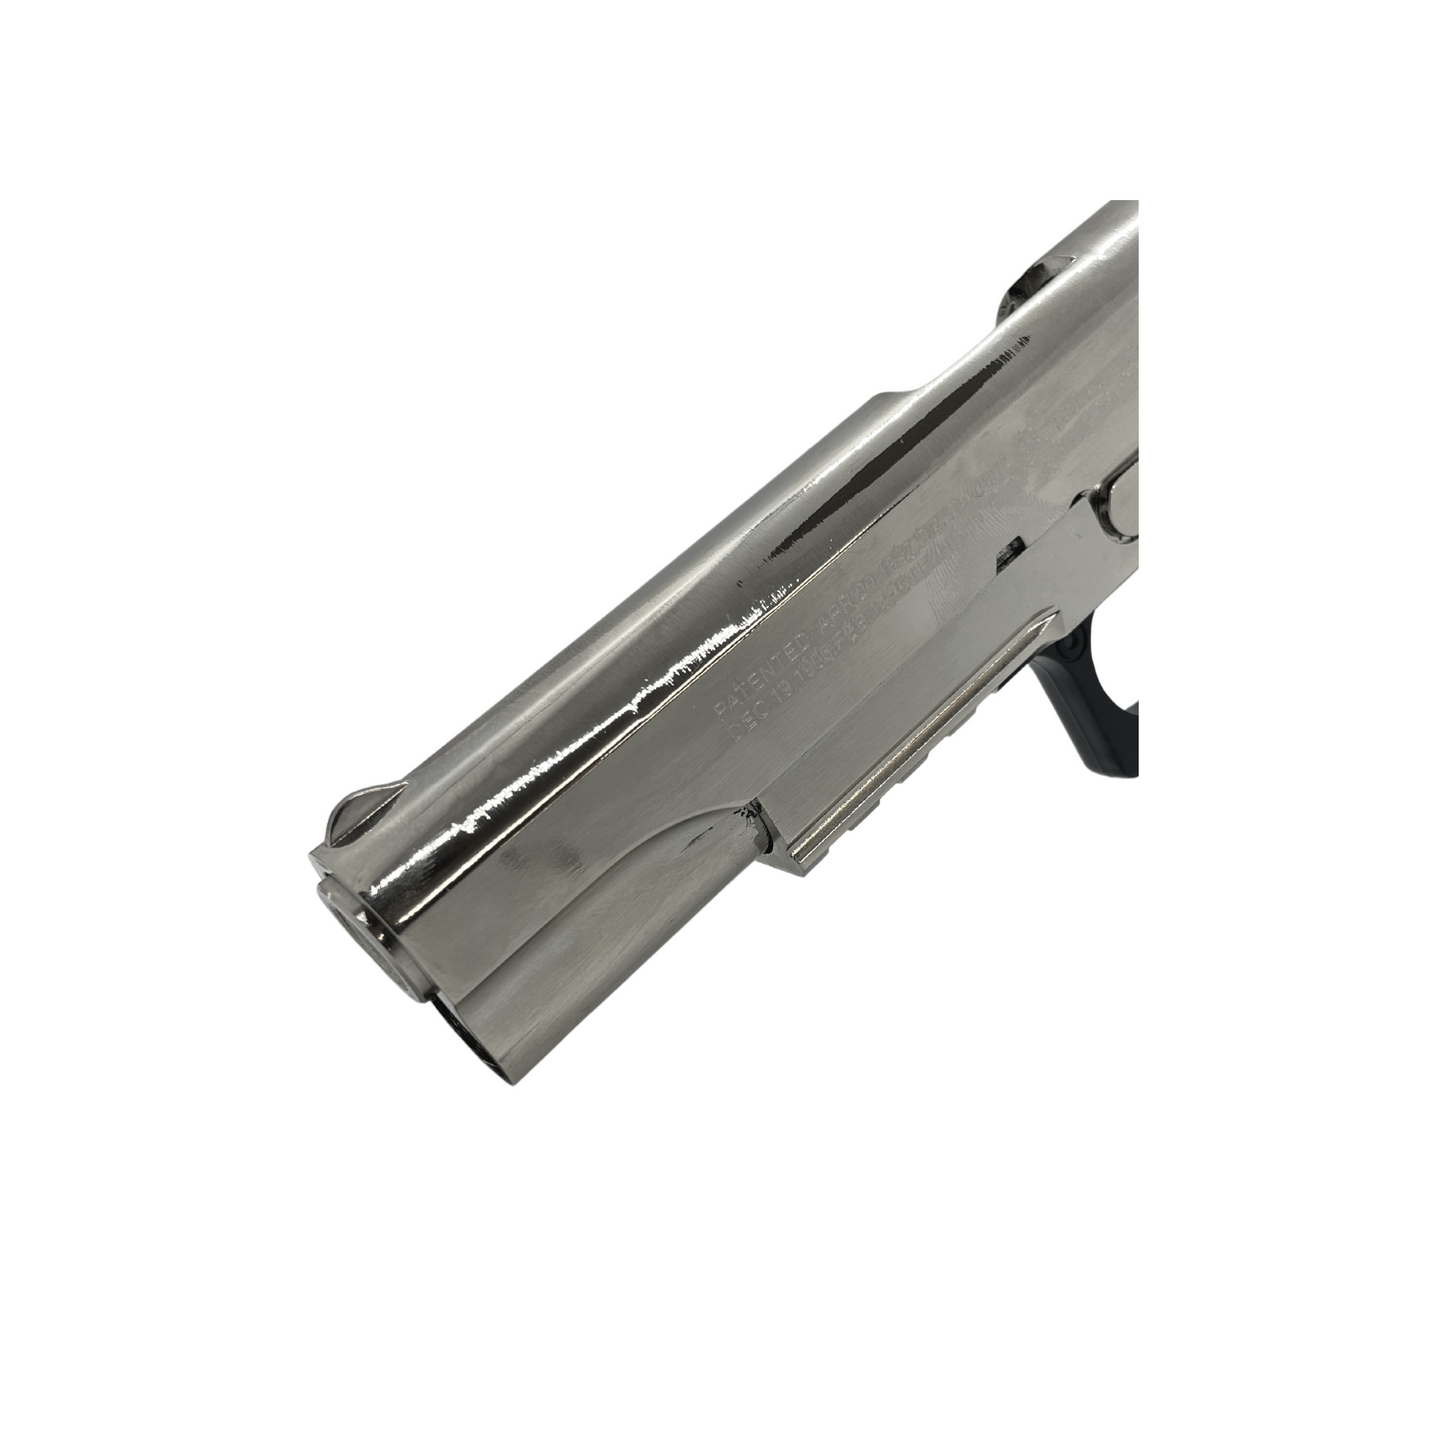 "Nickelback Capa" 5.1 Custom 1911 GBU Pistol - Gel Blaster